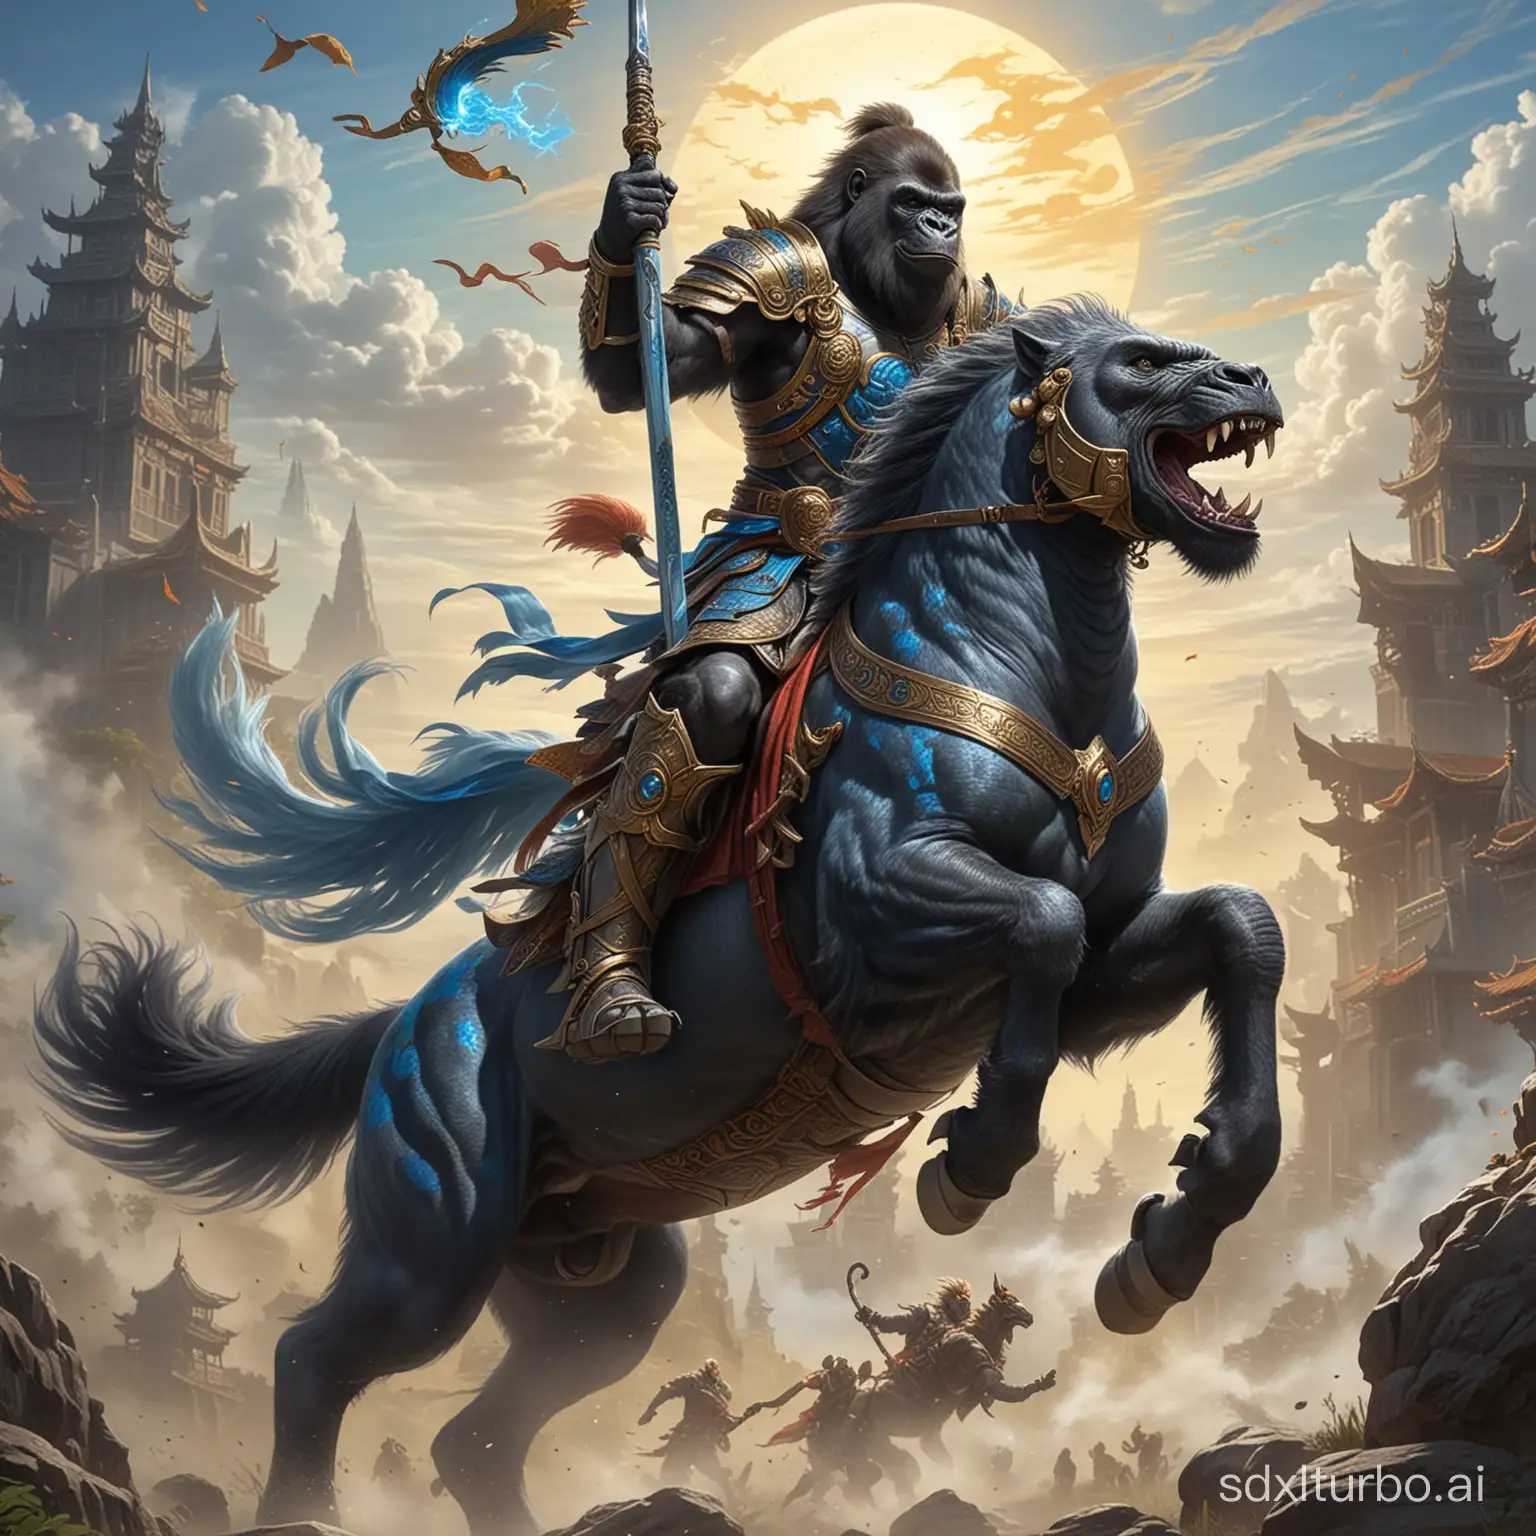 A gorilla riding a horse, wearing armor and wielding the Azure Dragon Crescent Blade, battles Sun Wukong.